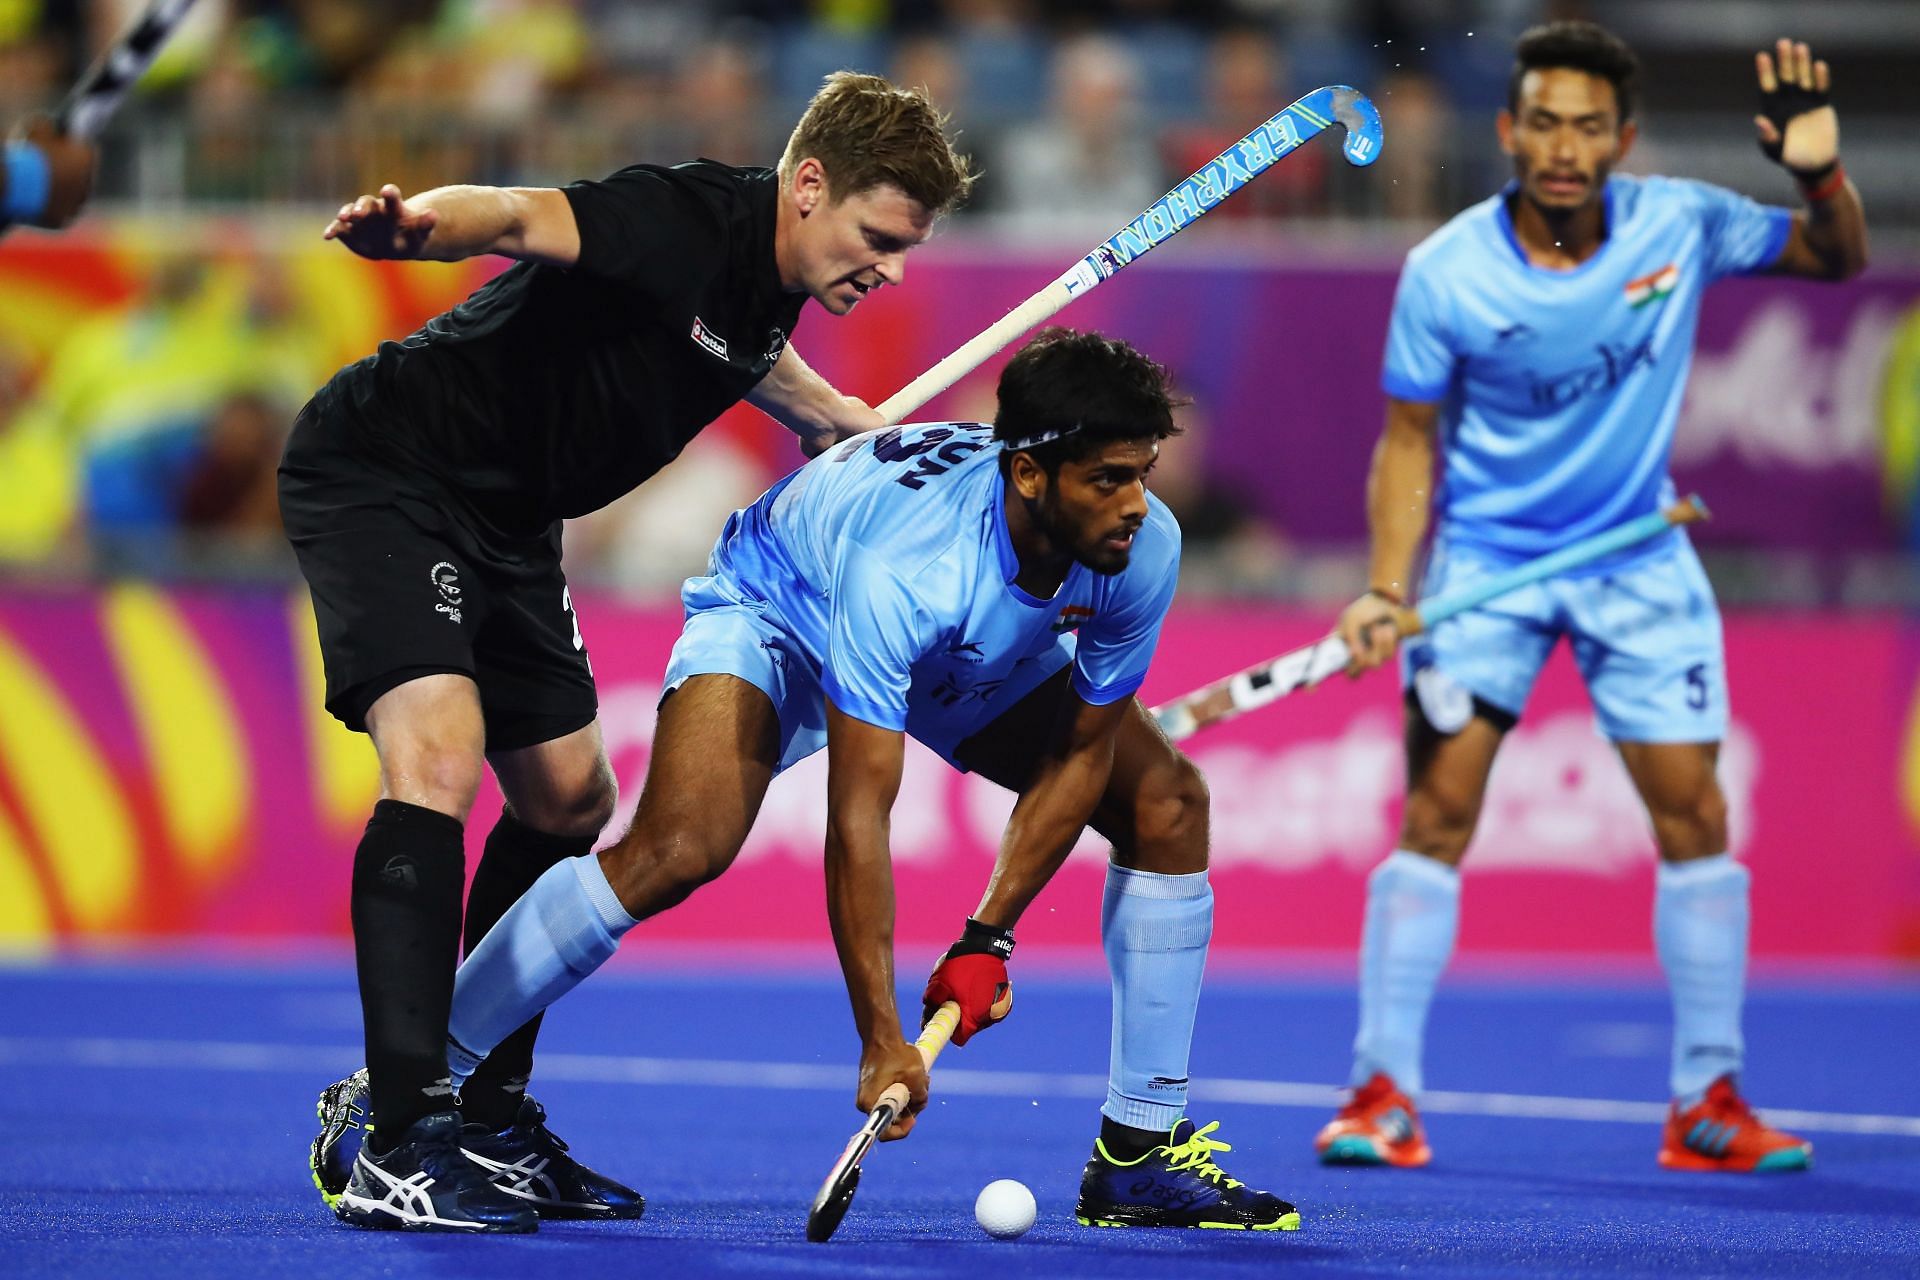 Hockey - Commonwealth Games Day 9: Varun Kumar in action